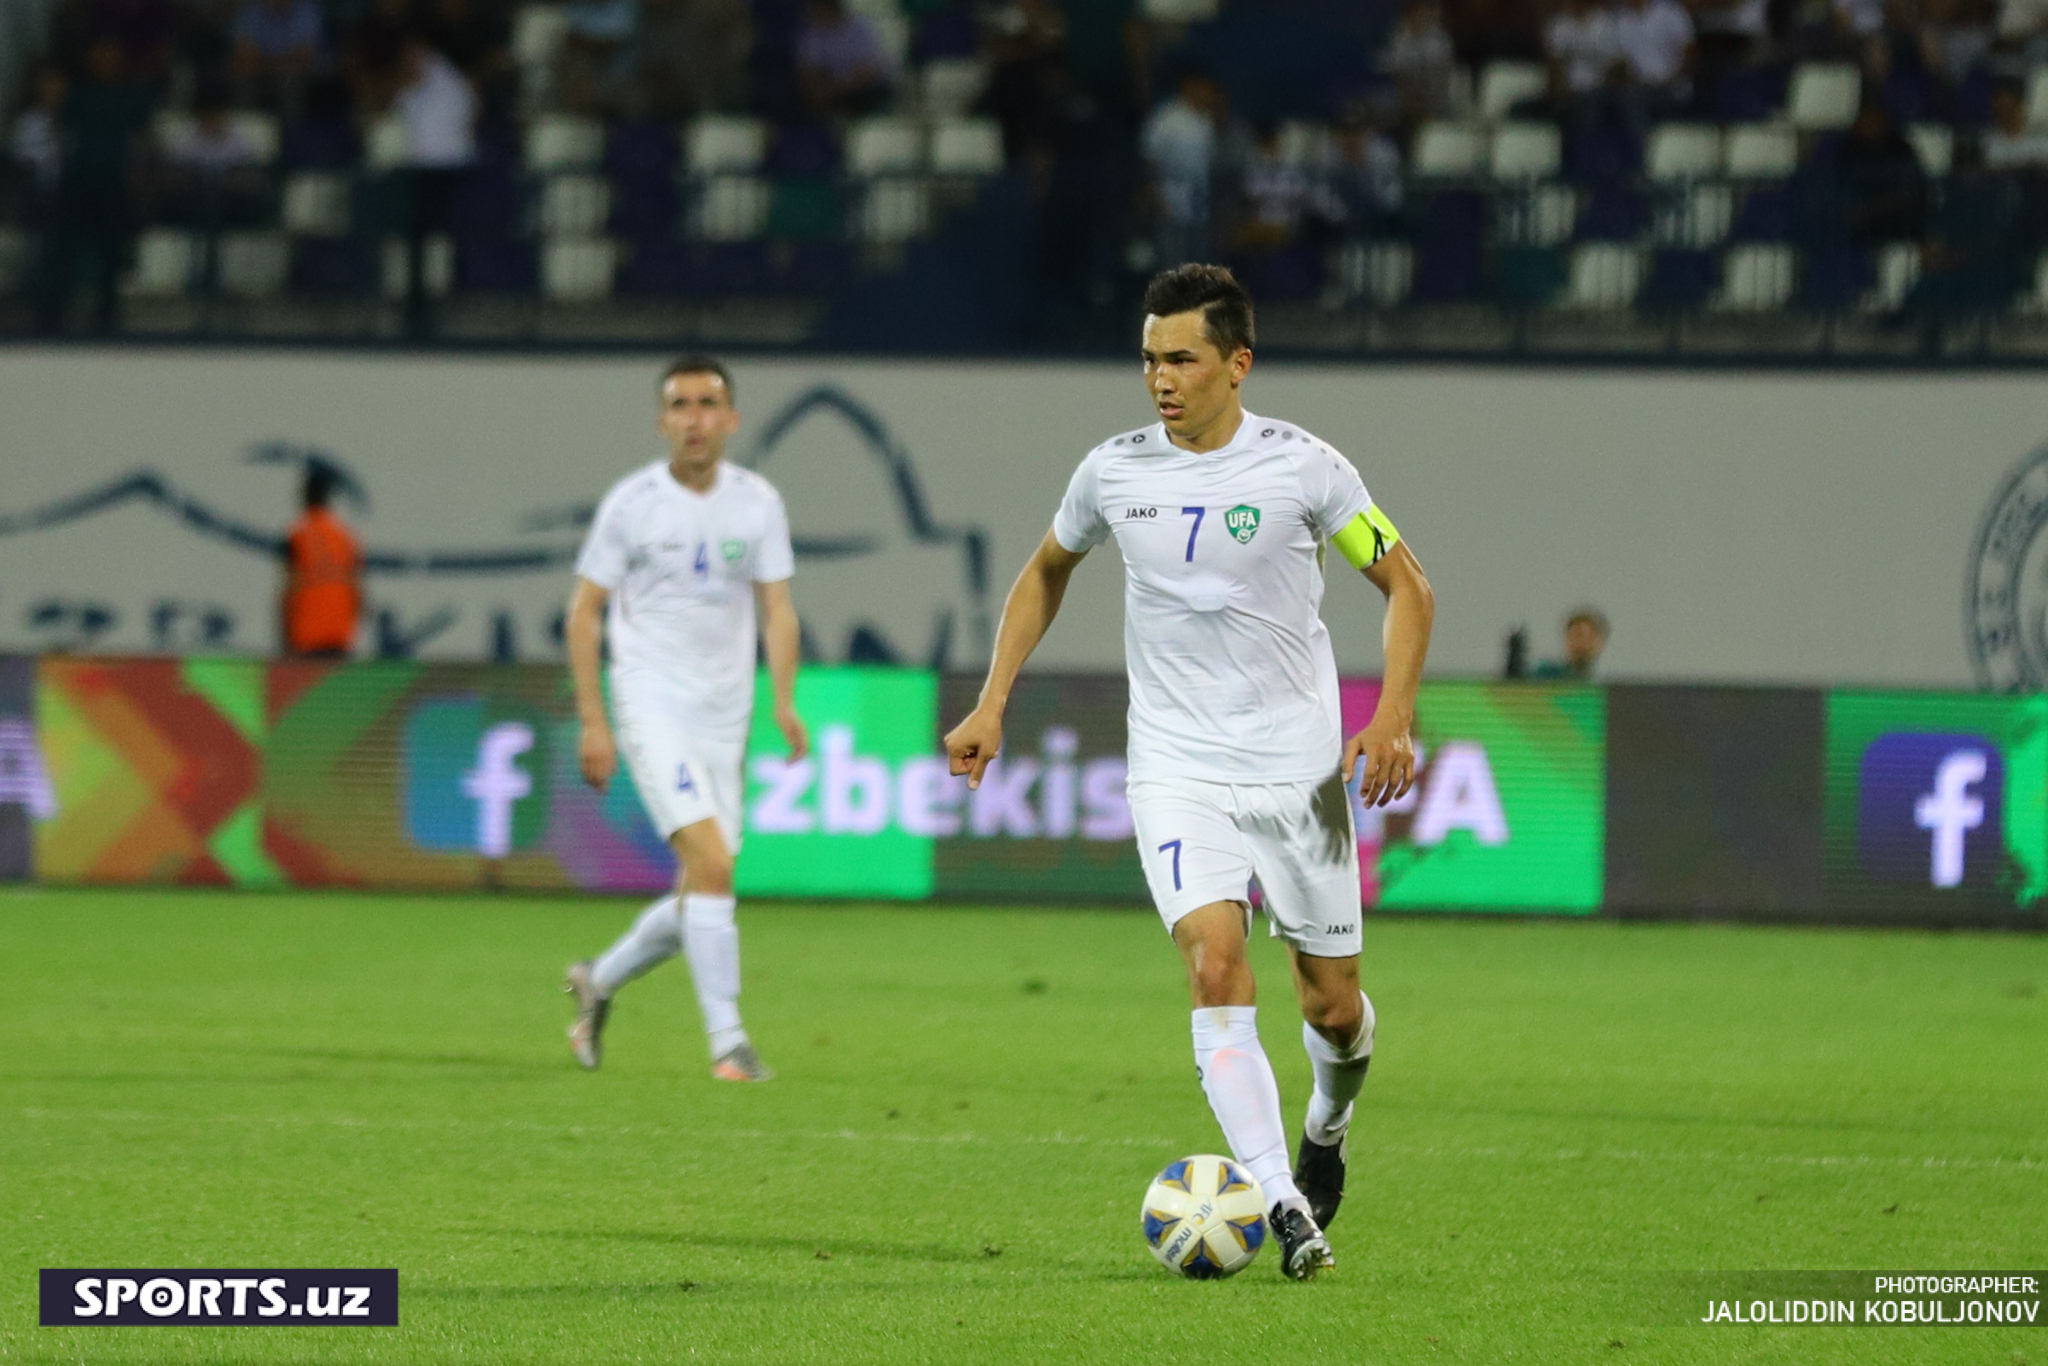 Uzbekistan - Thailand full match 14/6/2022